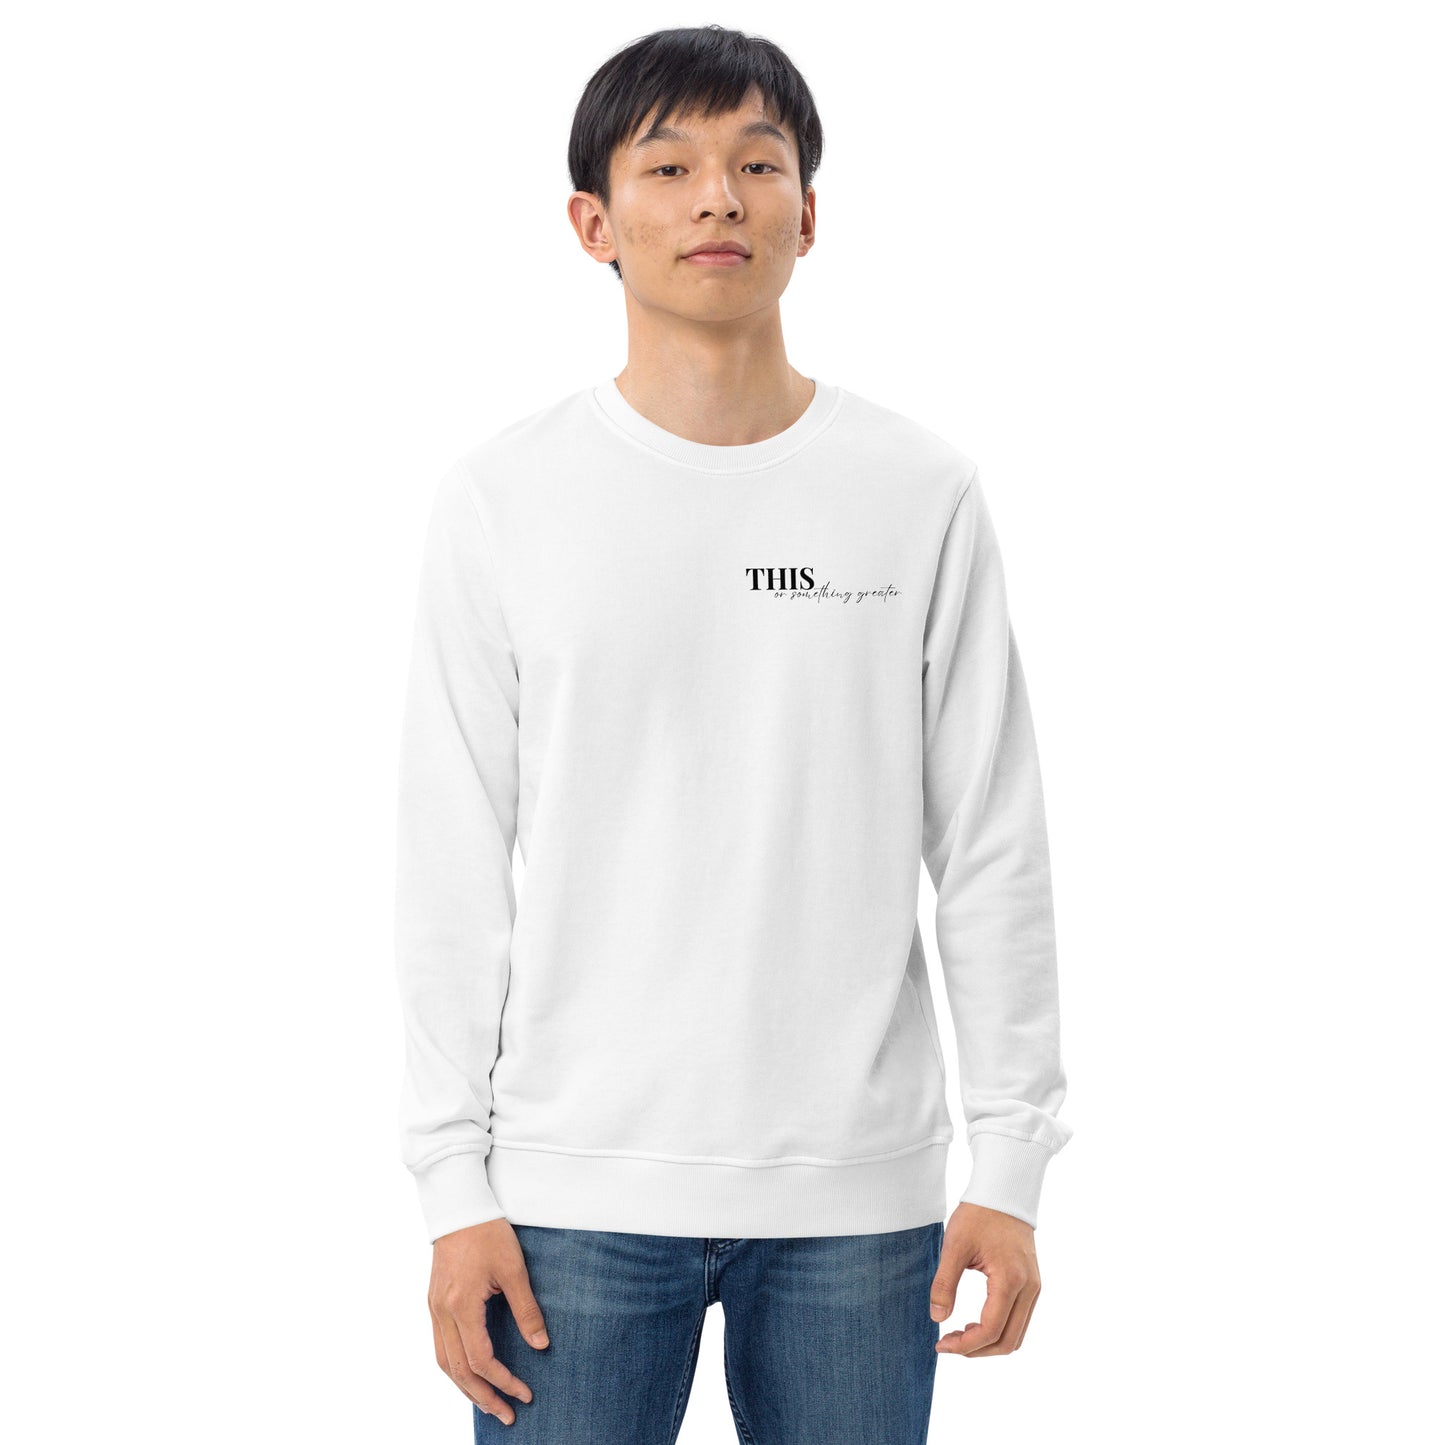 "This or something greater" Unisex Organic Sweatshirt